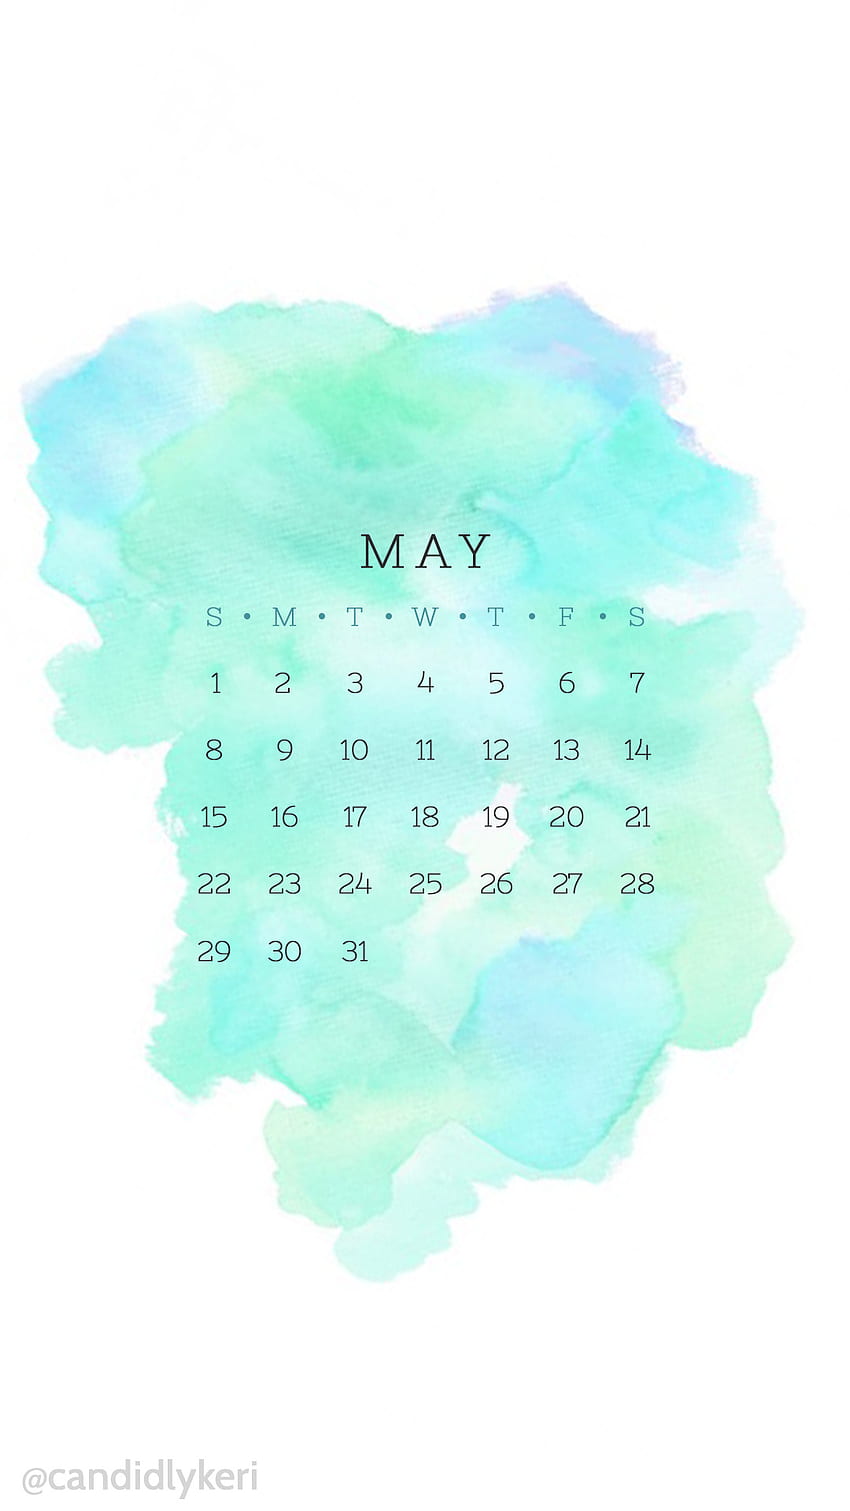 Calendario mayo 2016 azul turquesa y verde para iPhone android o fondo de pantalla del teléfono